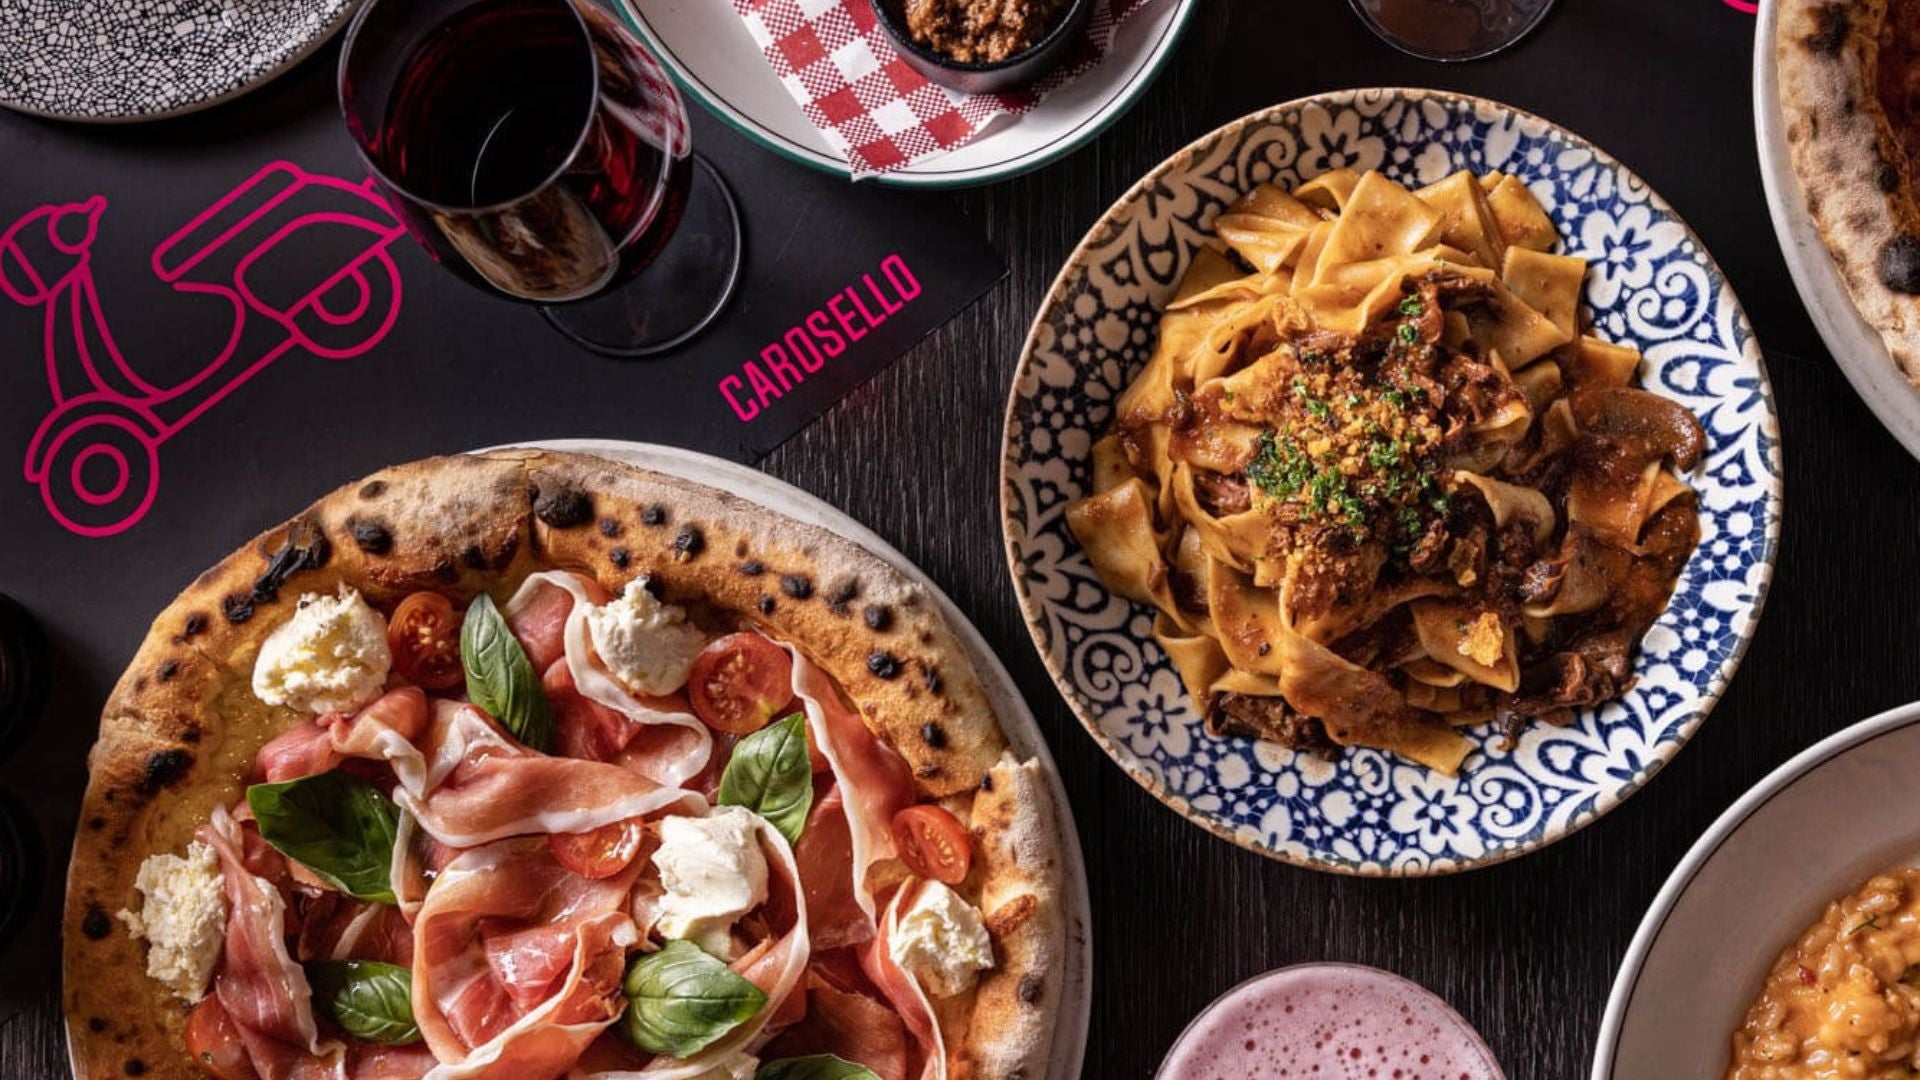 Carosello: Italian restaurant in Moonee Ponds